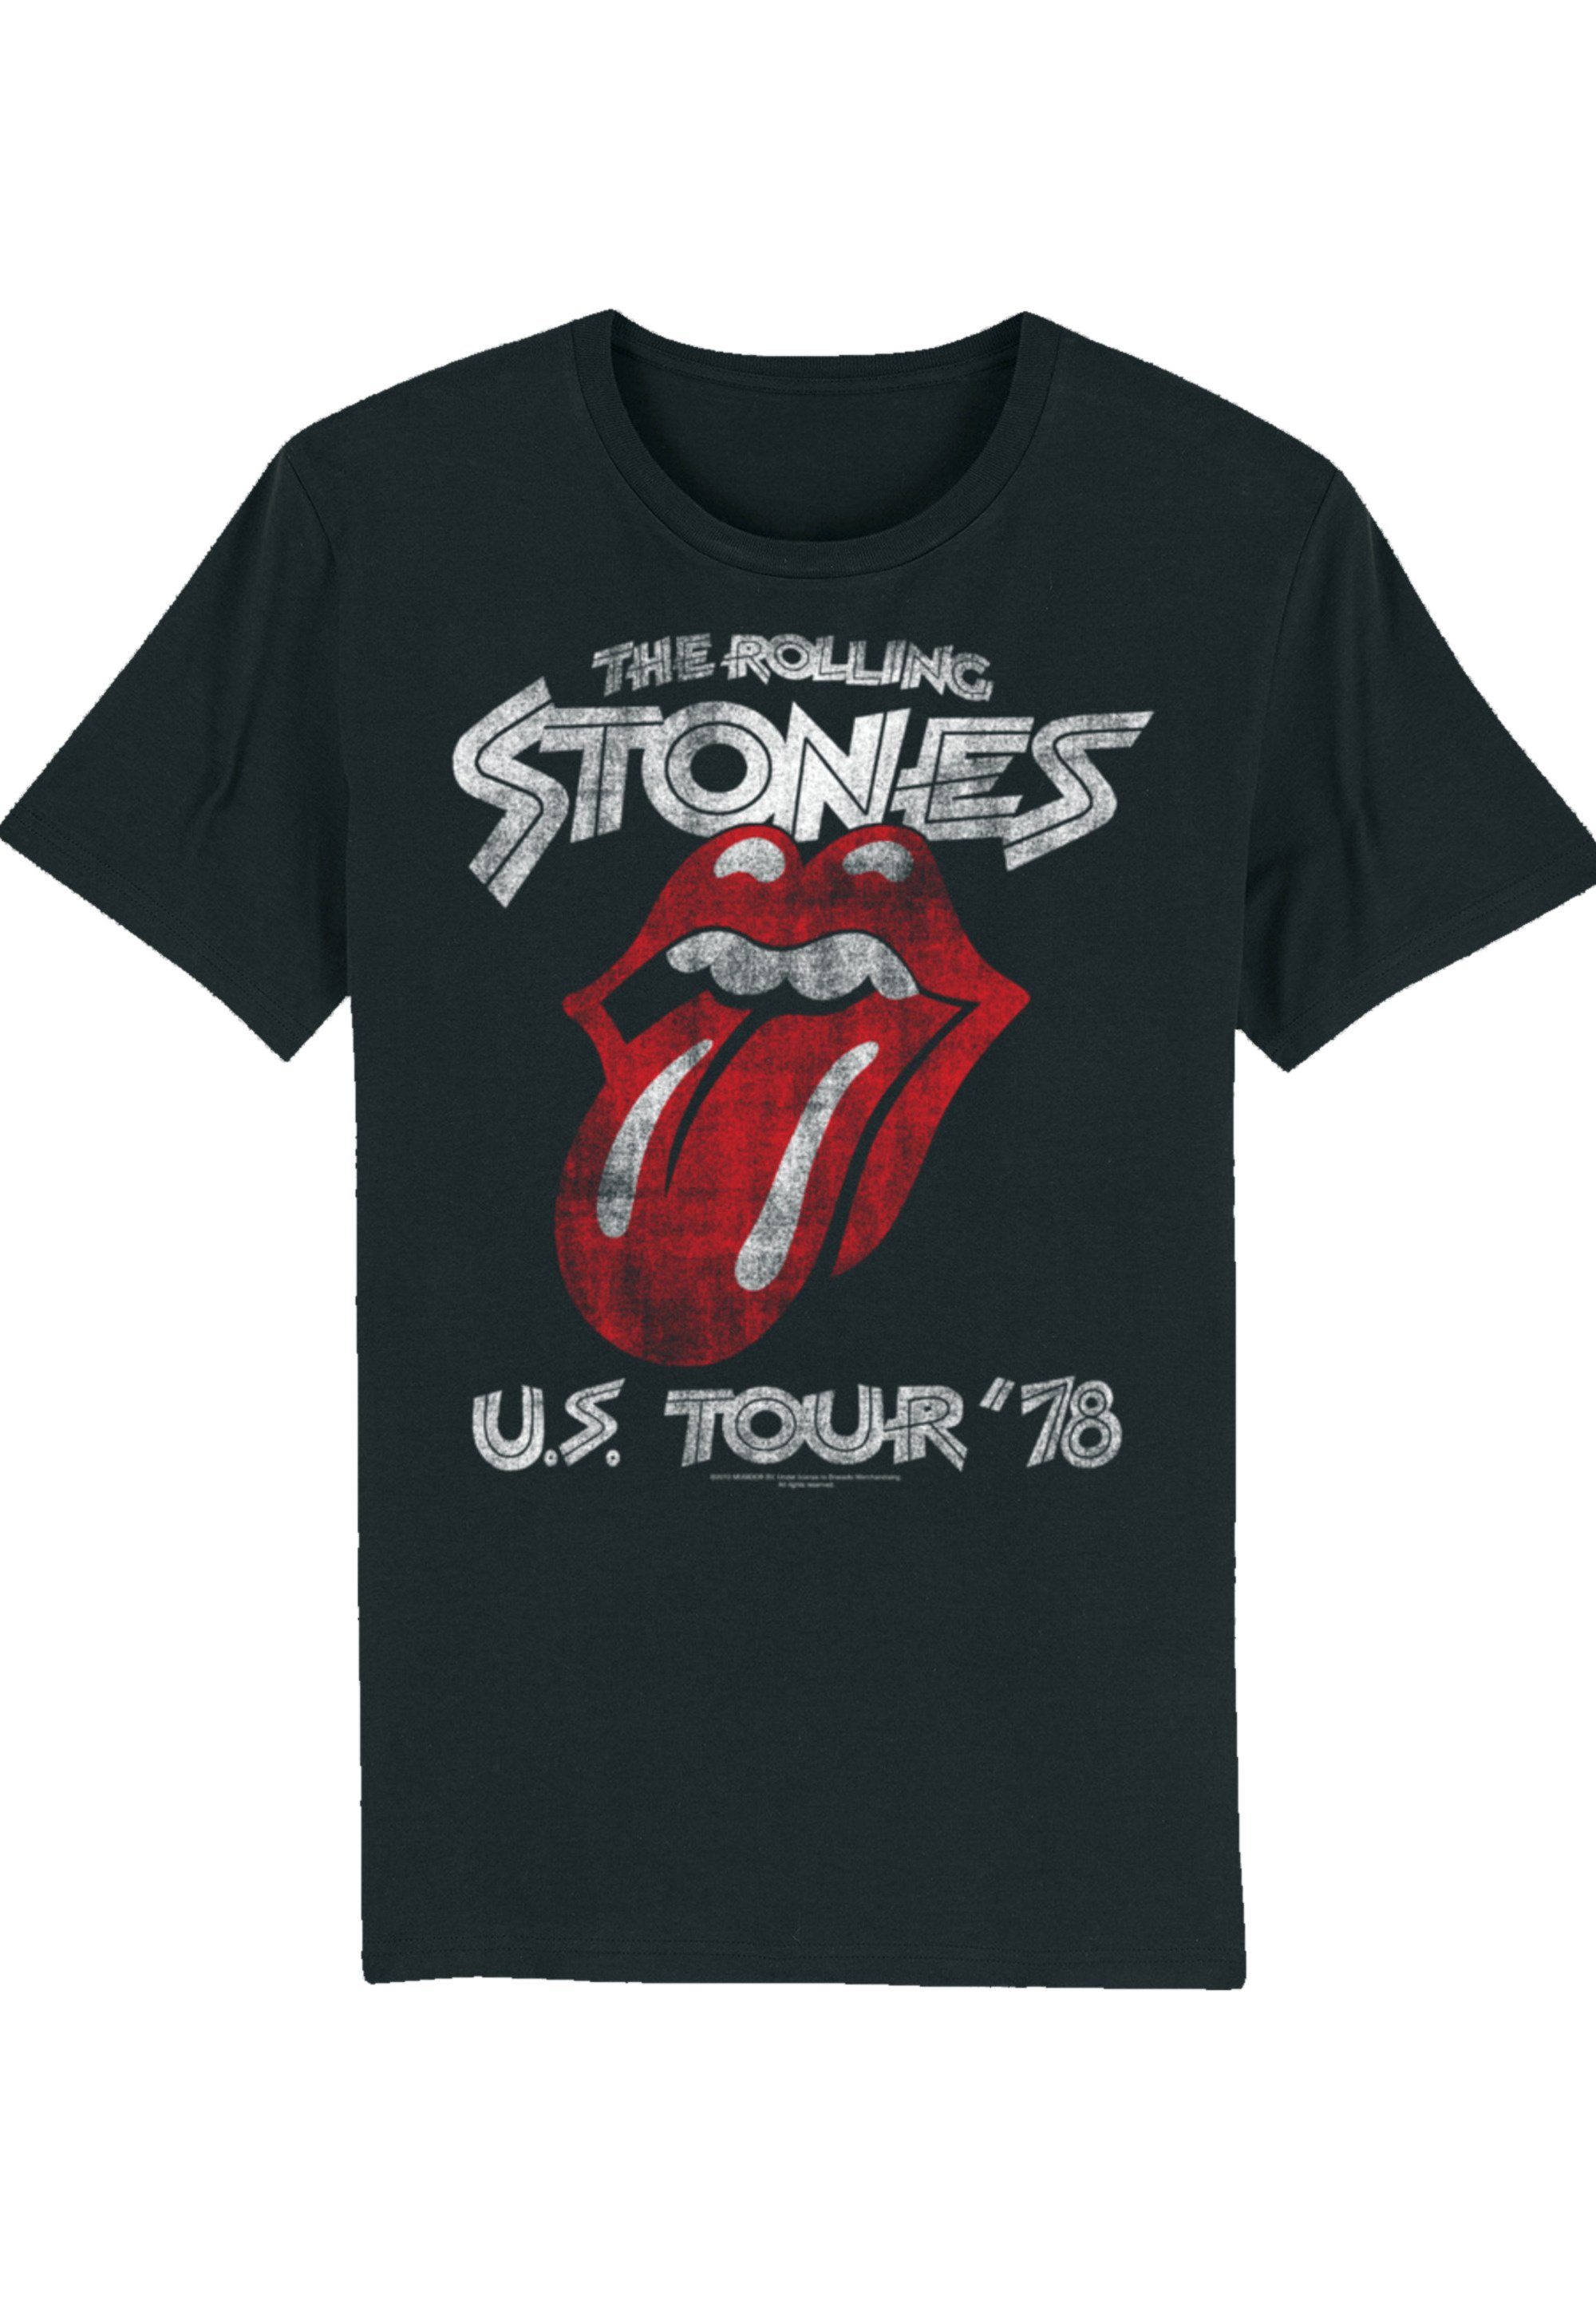 F4NT4STIC T-Shirt The Rolling Stones Komfortabel kombinierbar Tour \'78 vielseitig Print, US und